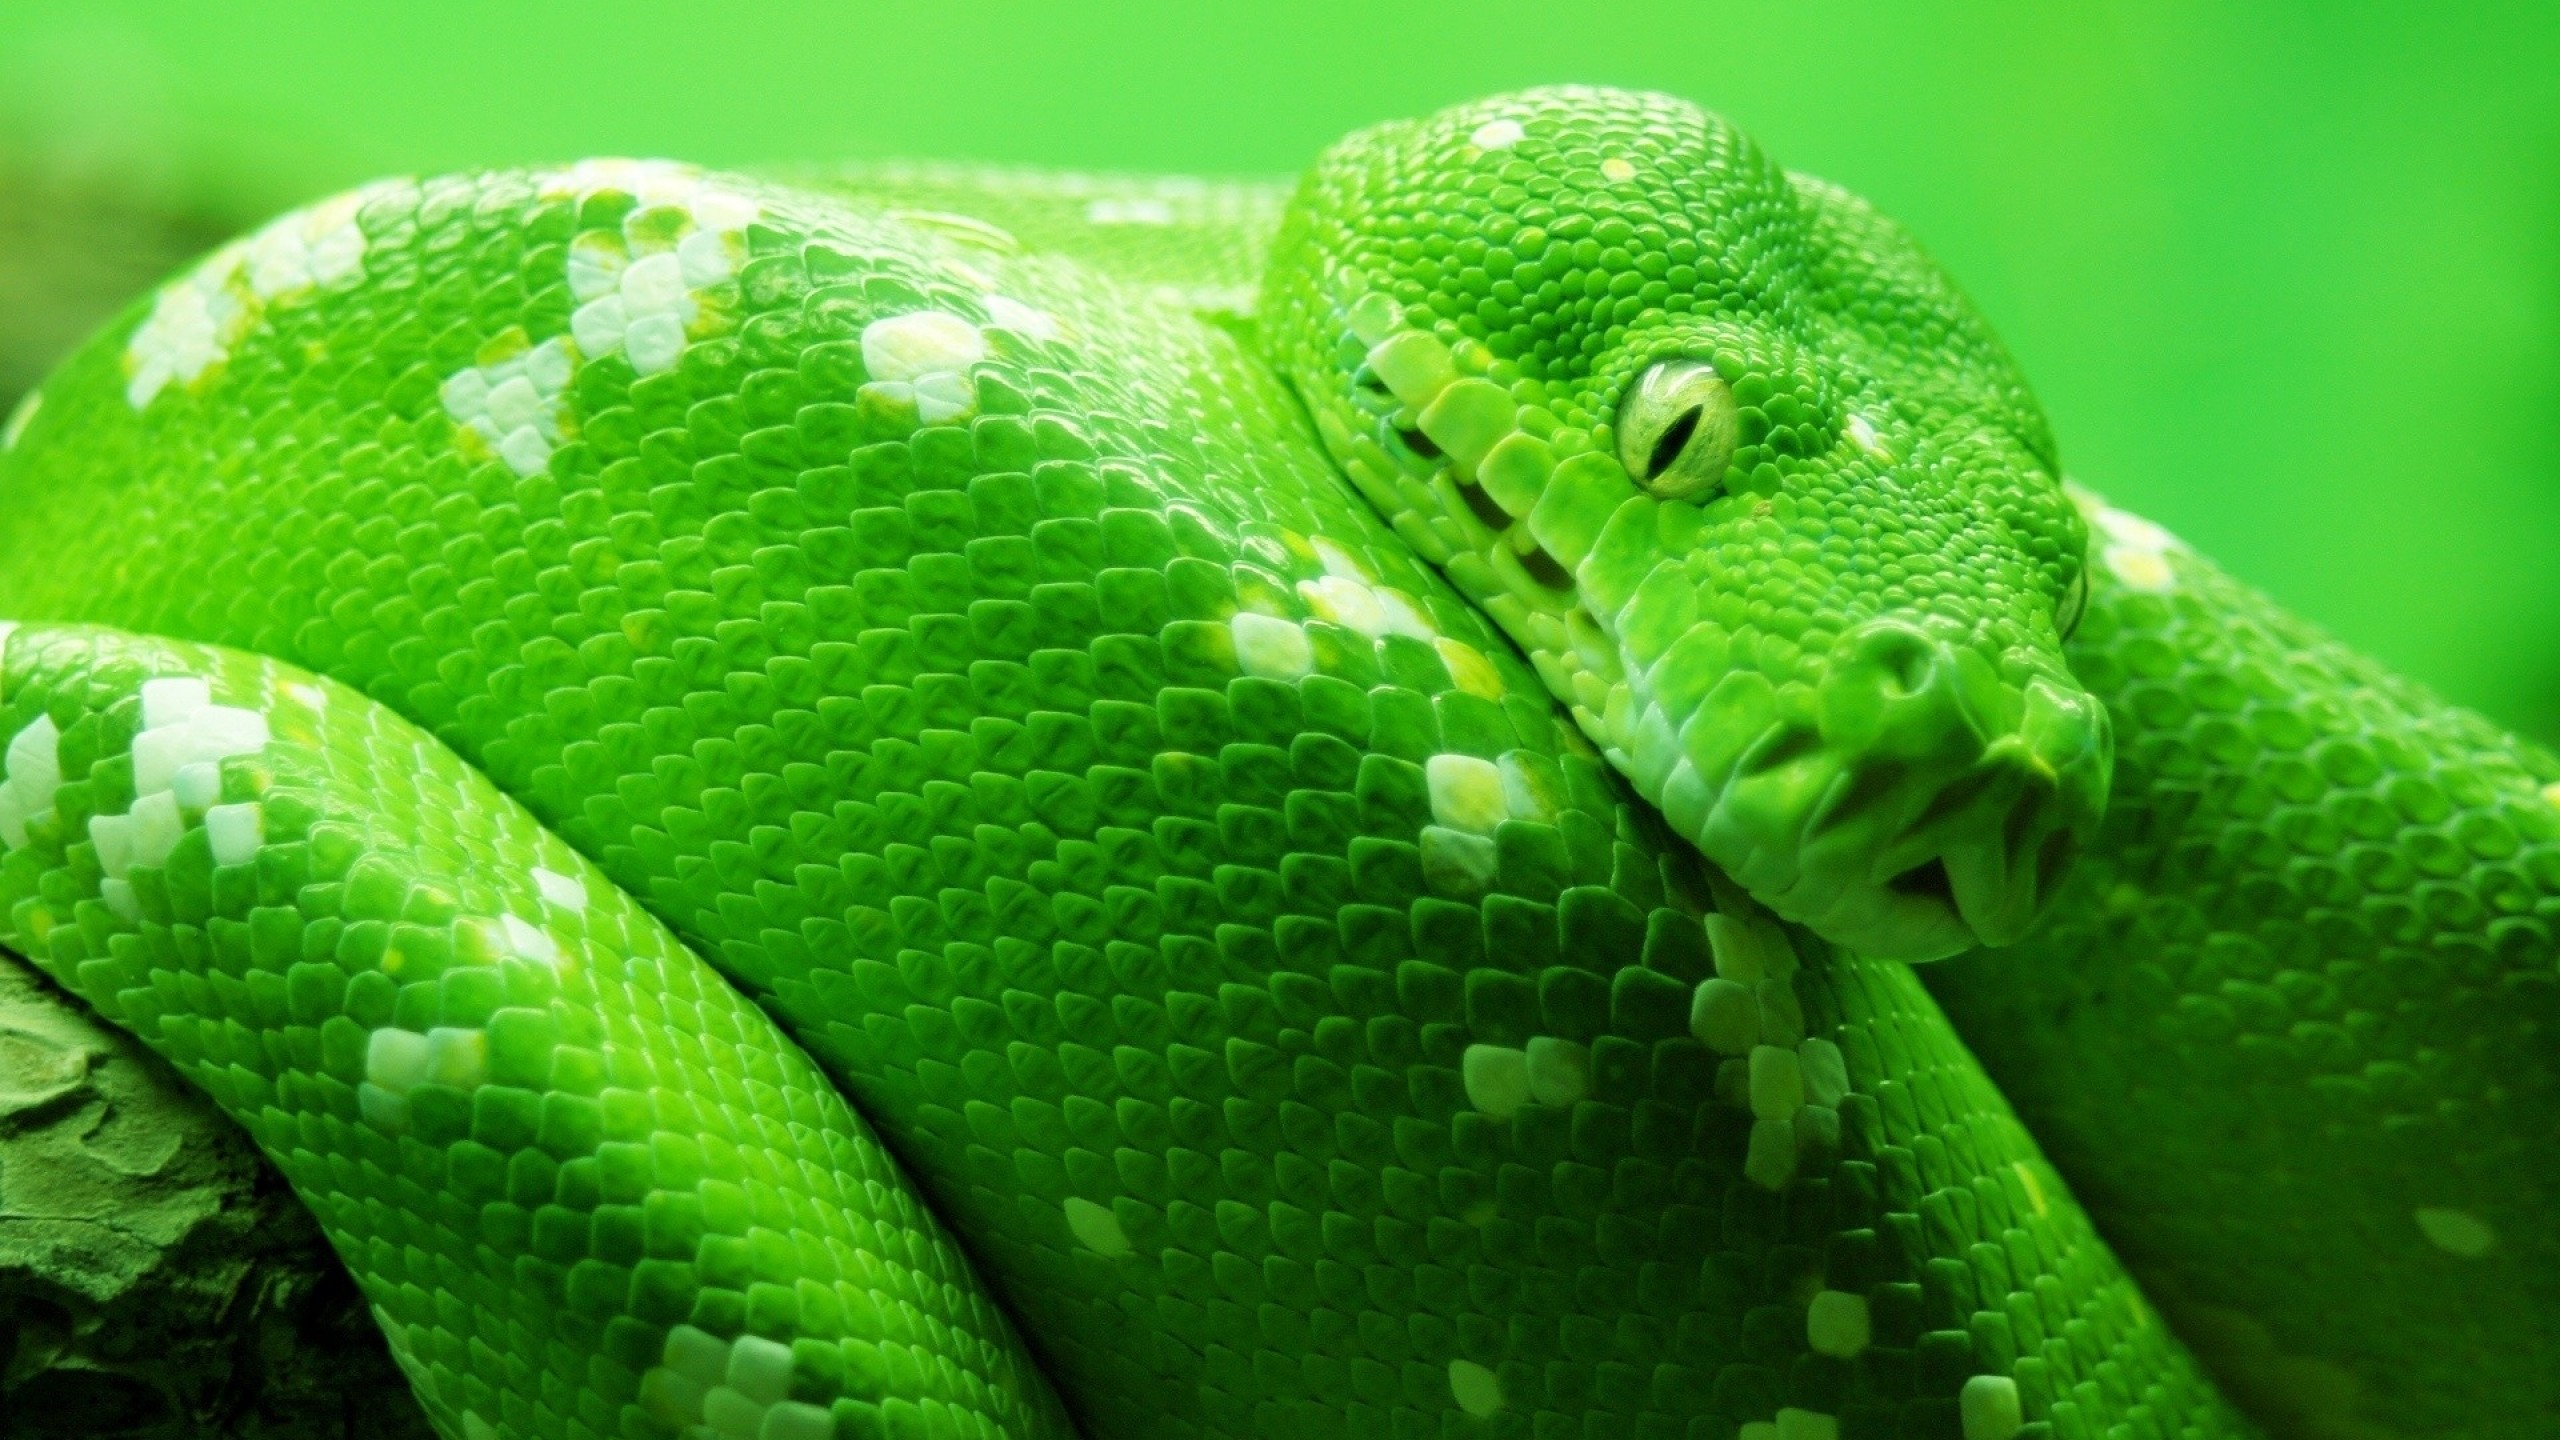 Python Snake 2560x1440